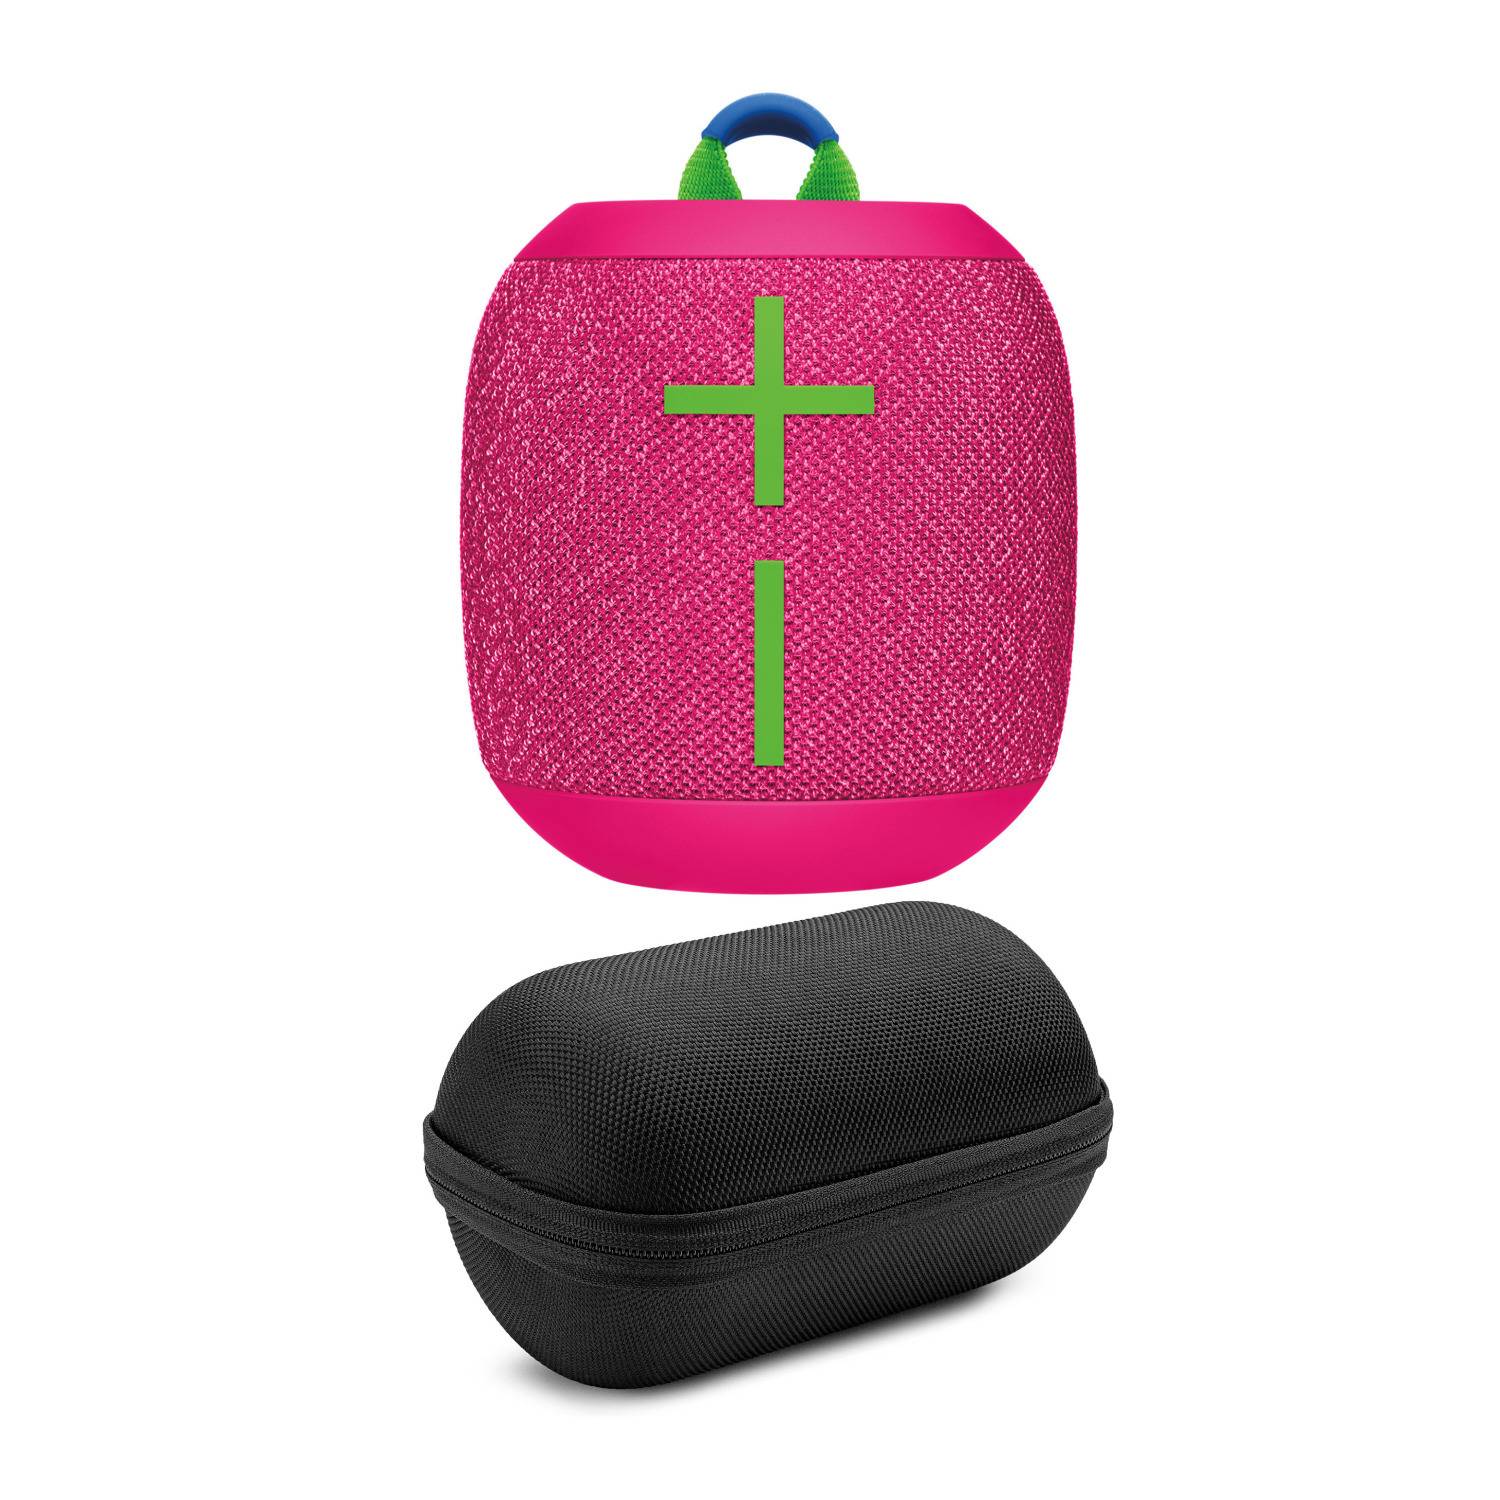 Ultimate Ears WONDERBOOM 3 Bluetooth Speaker (Hyper Pink) and Knox Gear Protective Case